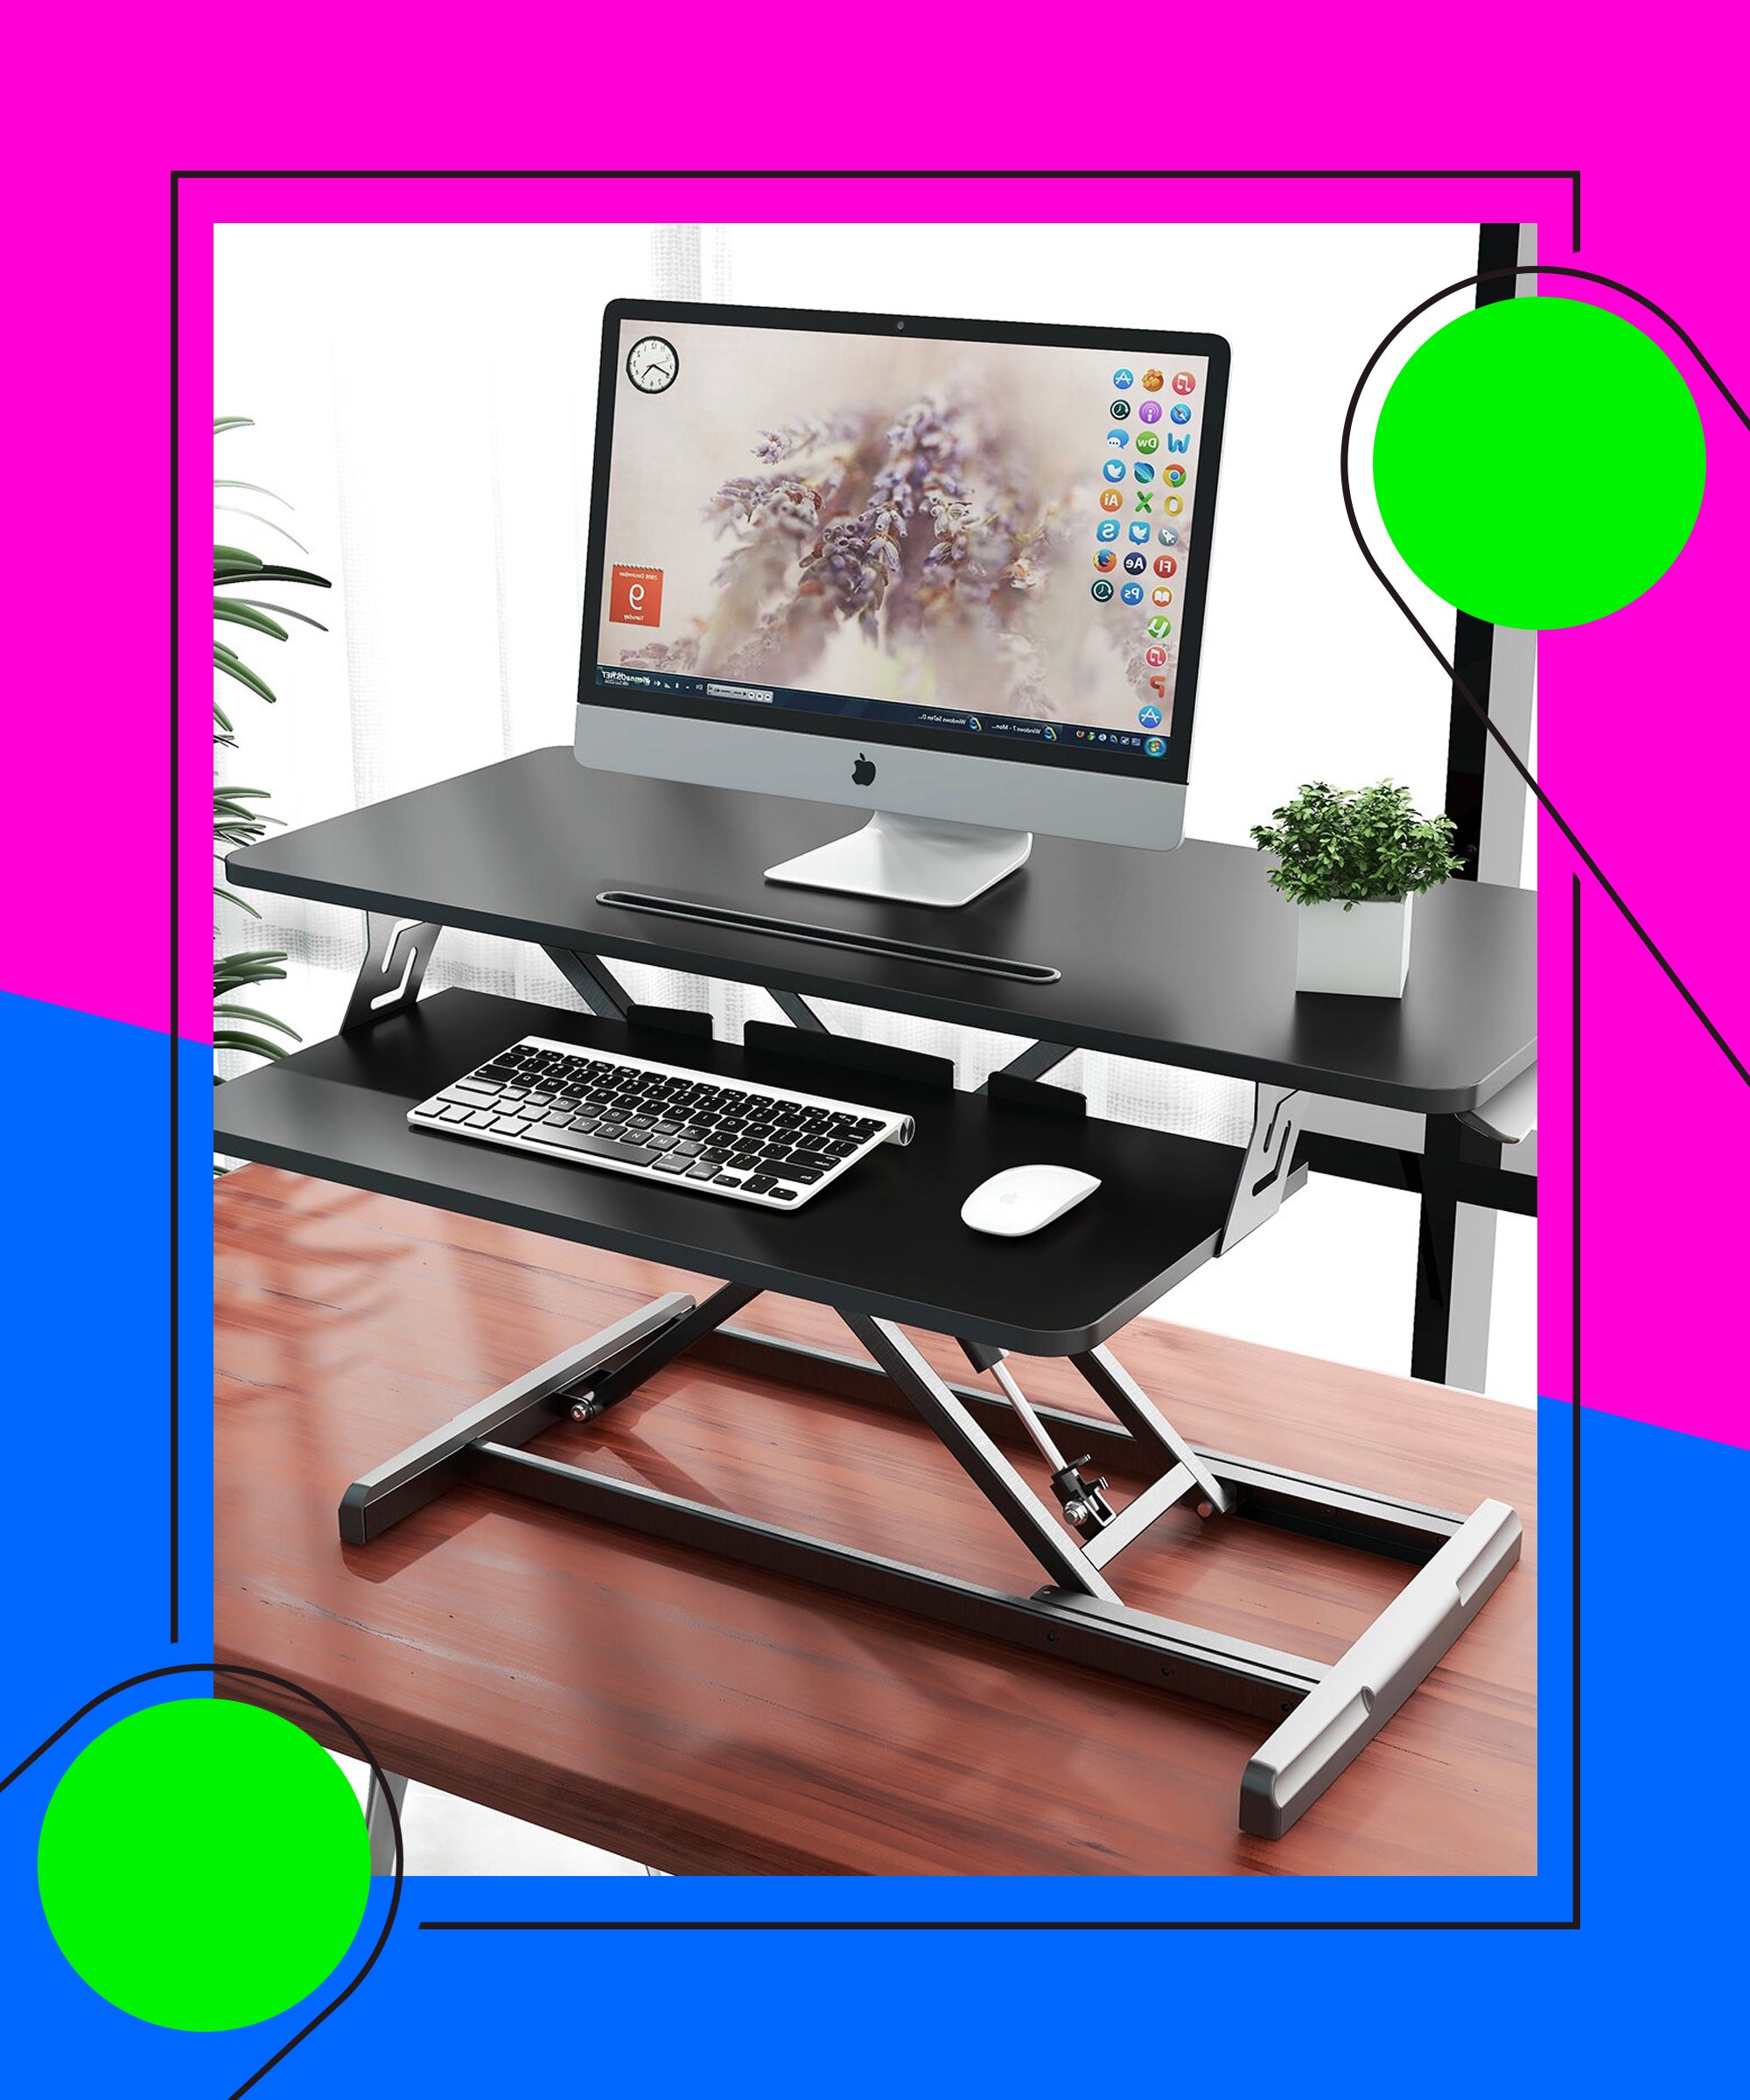 Huanuo adjustable lap desk review